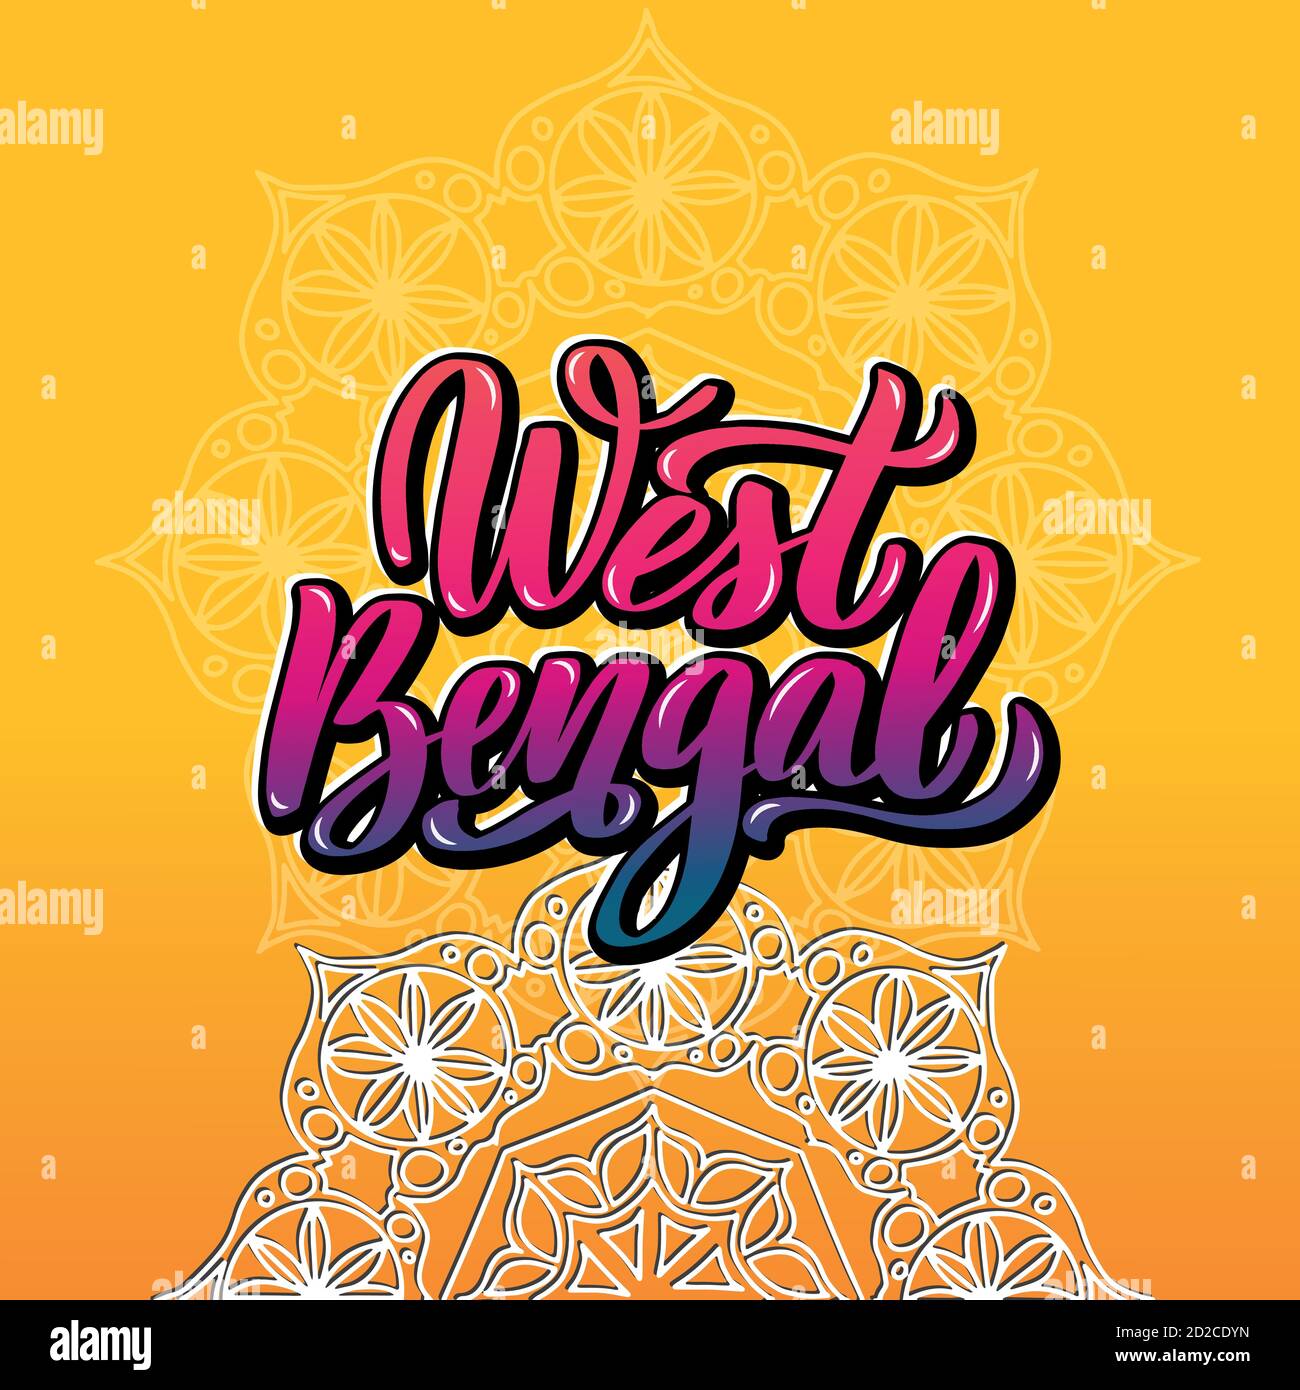 West Bengal Handwritten stock lettering typography. States Stock Vector